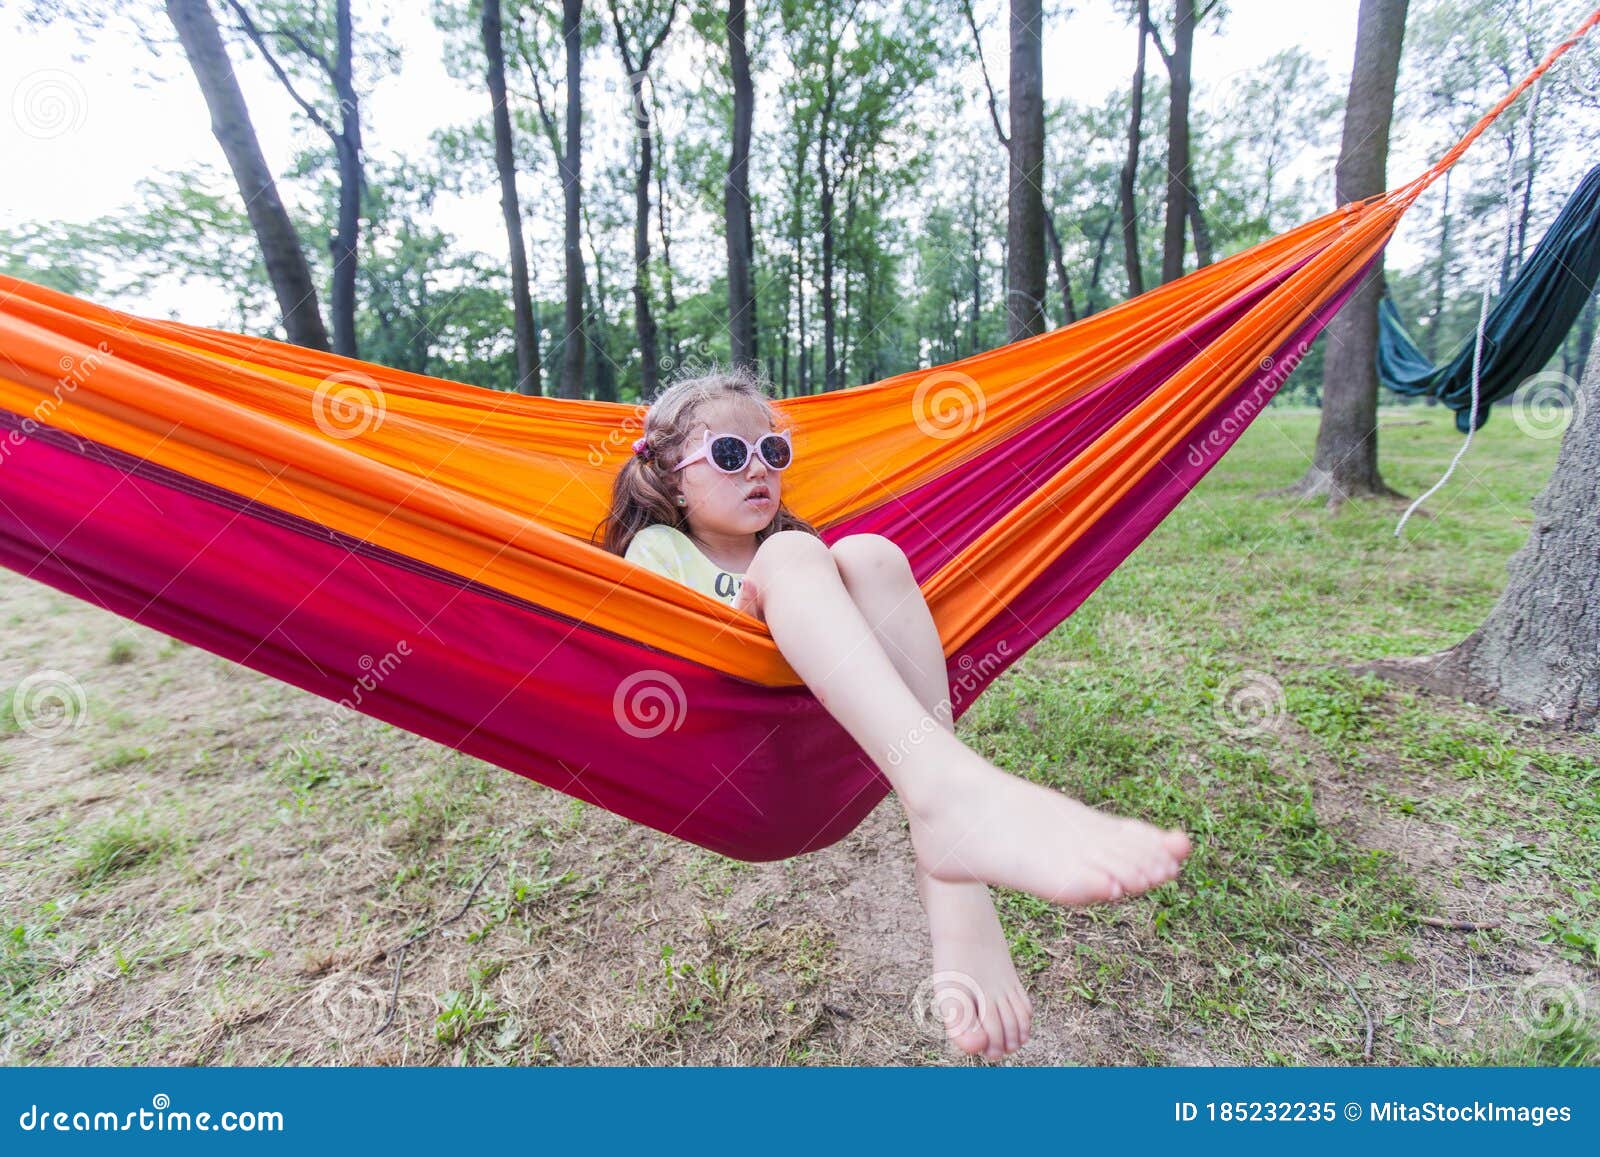 voelen geloof Waarnemen Happy Portrait of Little Girl Relax on Hammock in Forest Stock Image -  Image of hammock, outdoor: 185232235